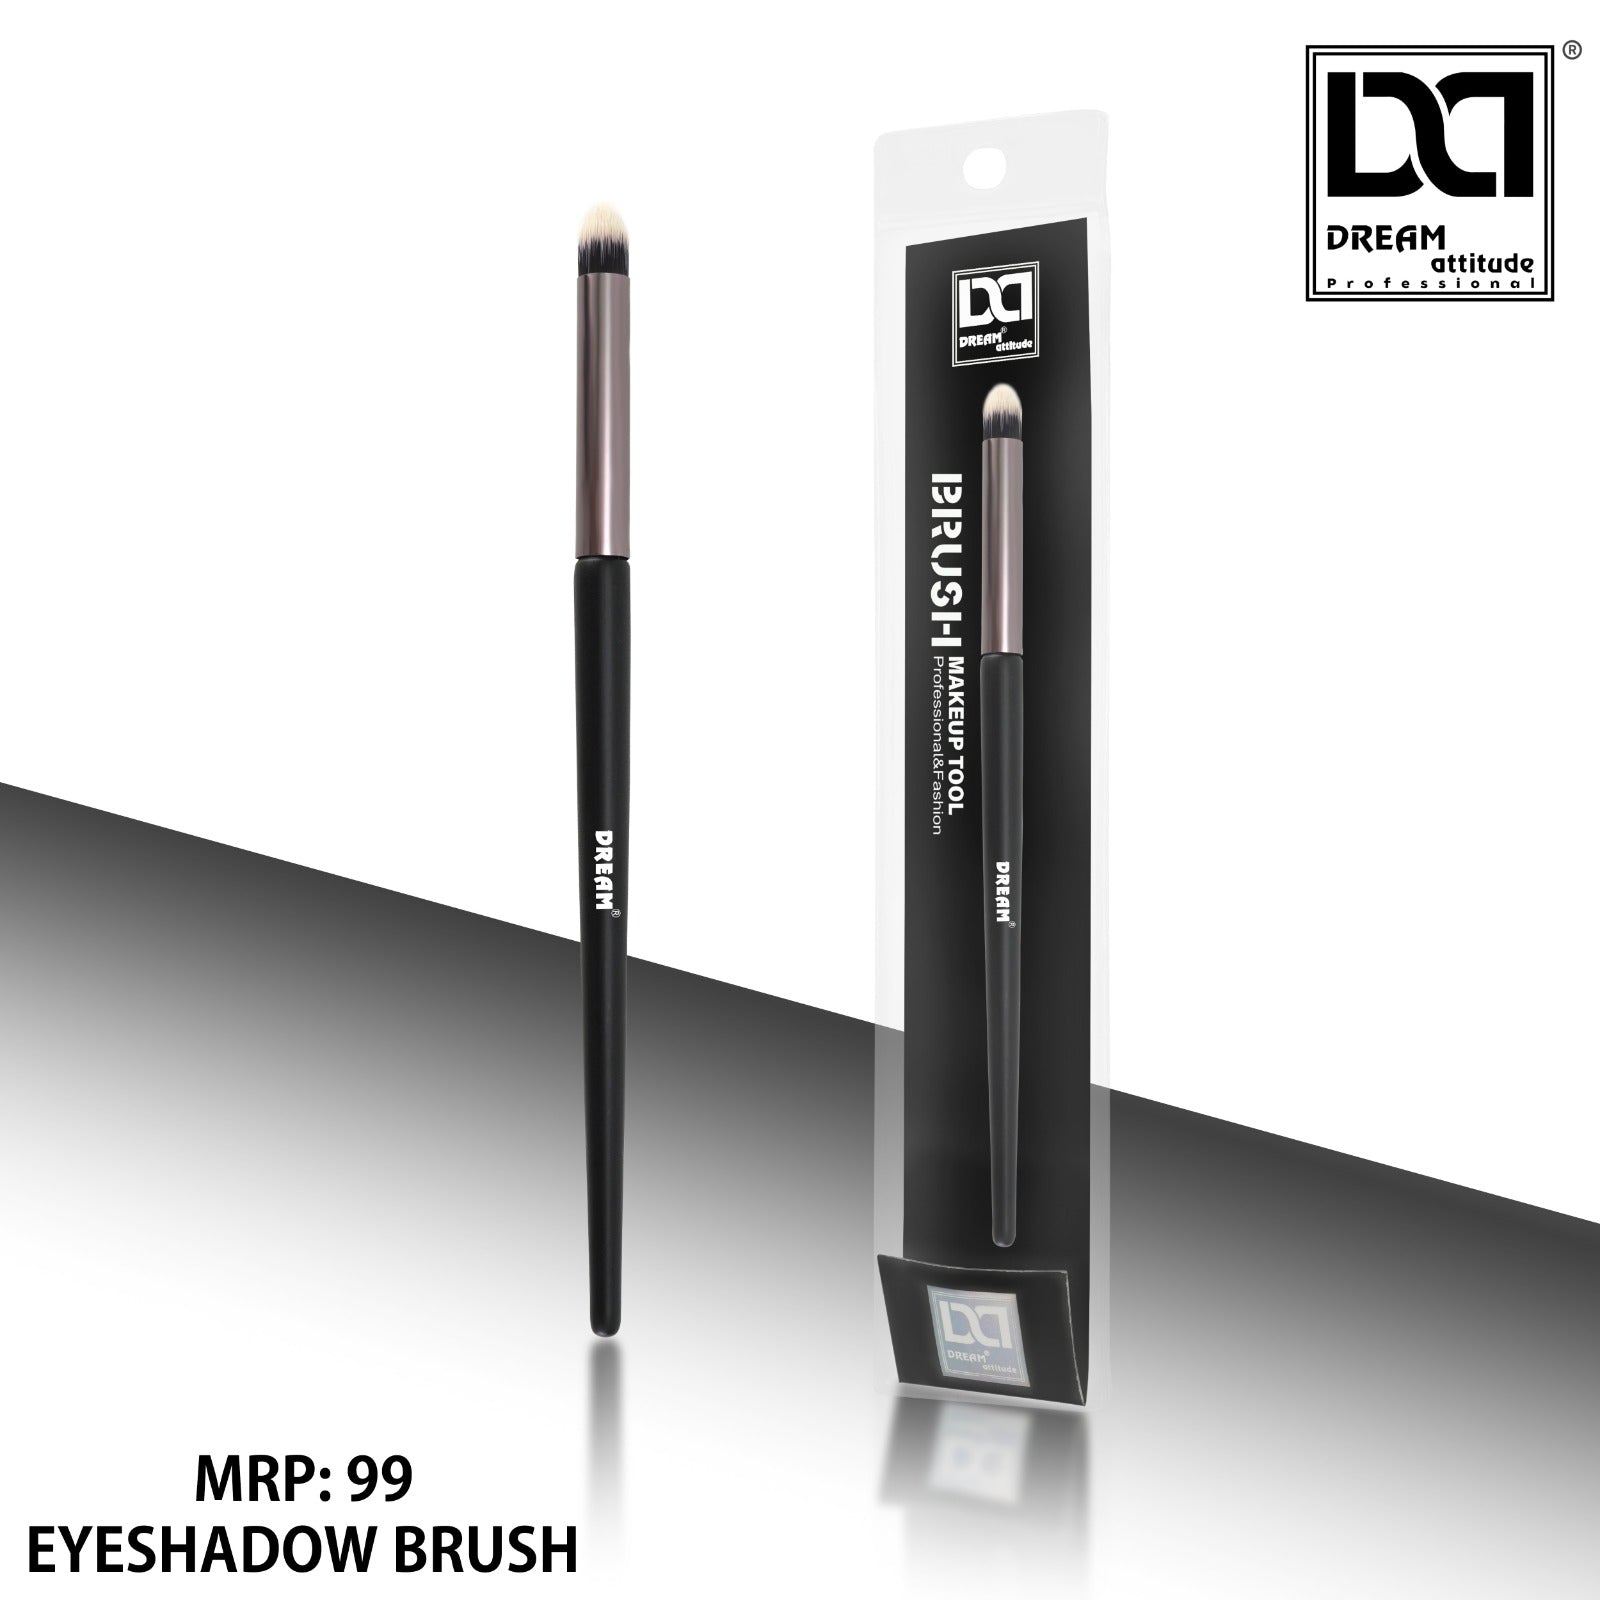 Elevate Your Eye Makeup with Precision: DREAM Attitude's EYESHADOW BRUSH DA-12